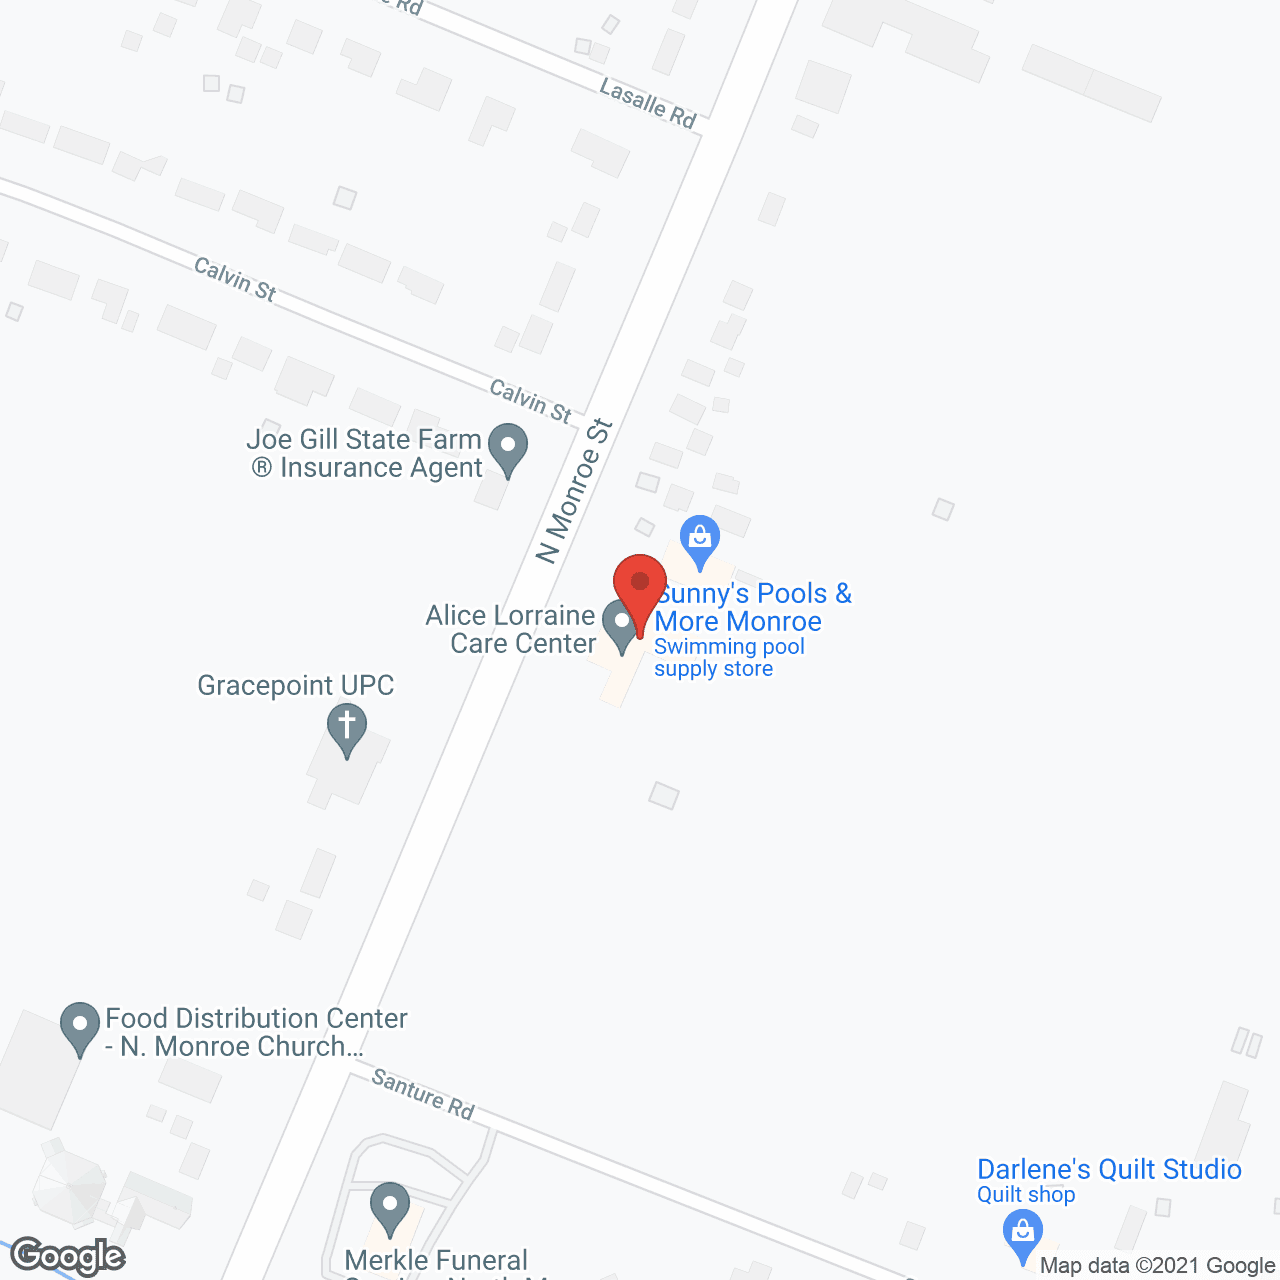 Alice Lorraine Care Center in google map